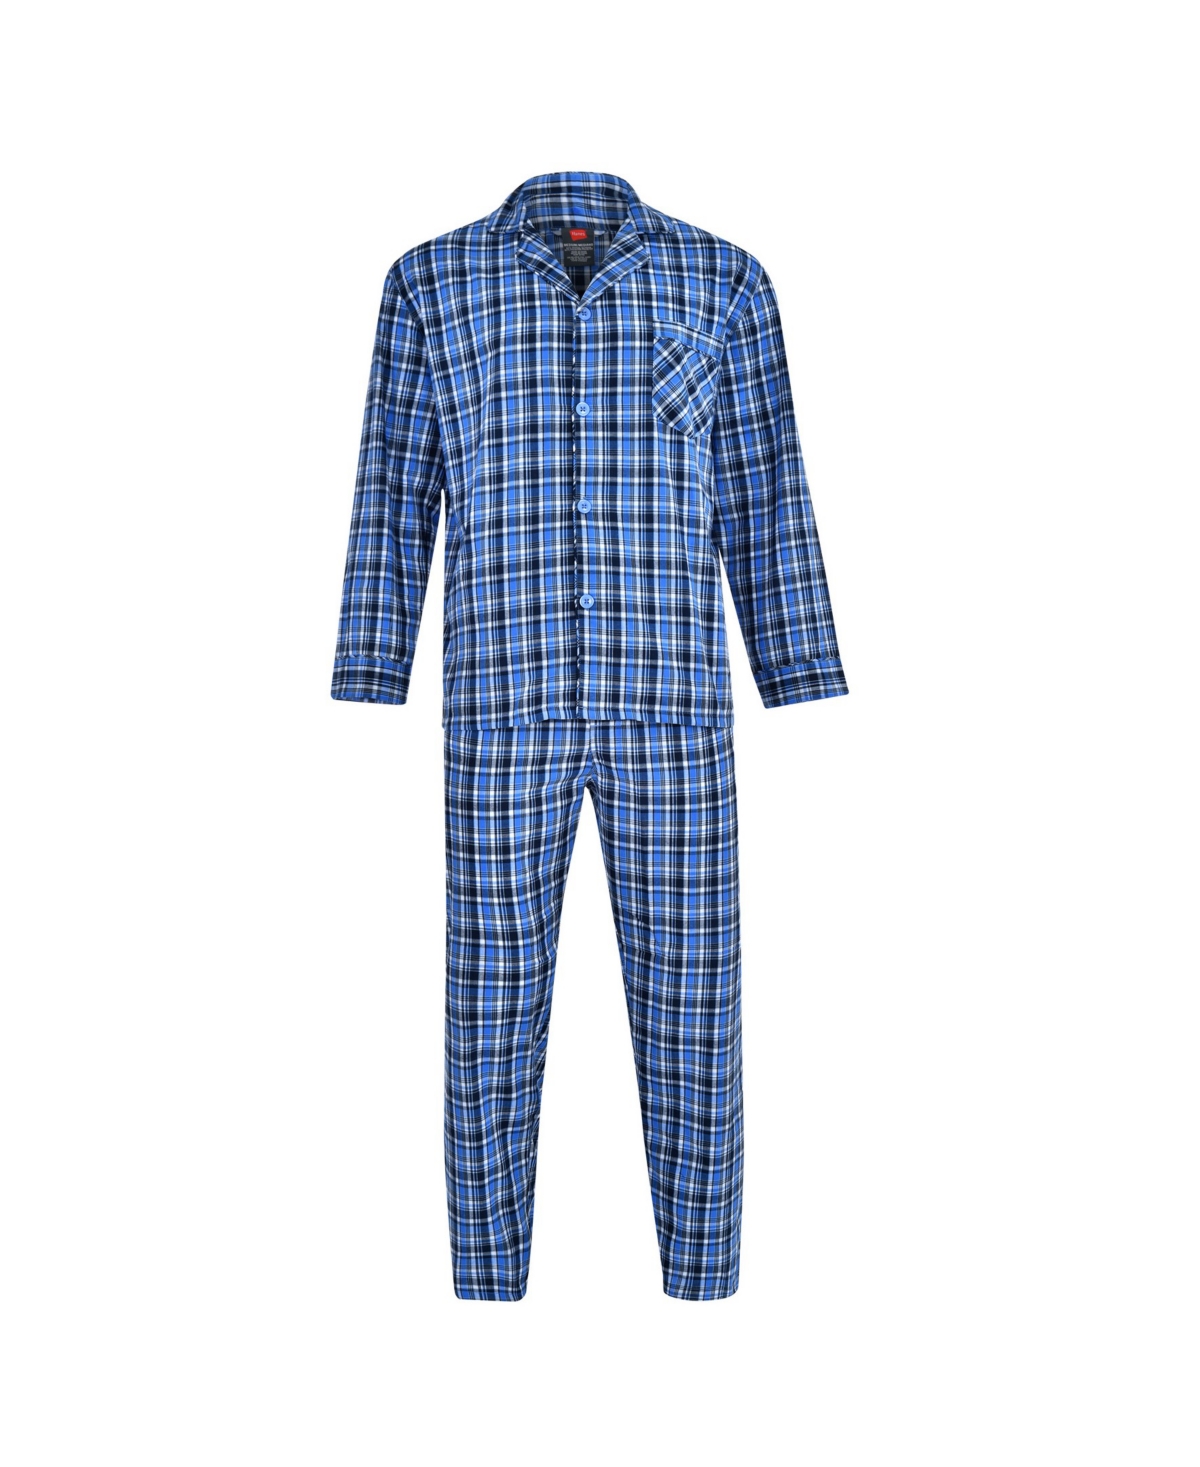 Hanes Platinum Hanes Men's Cvc Broadcloth Pajama Set